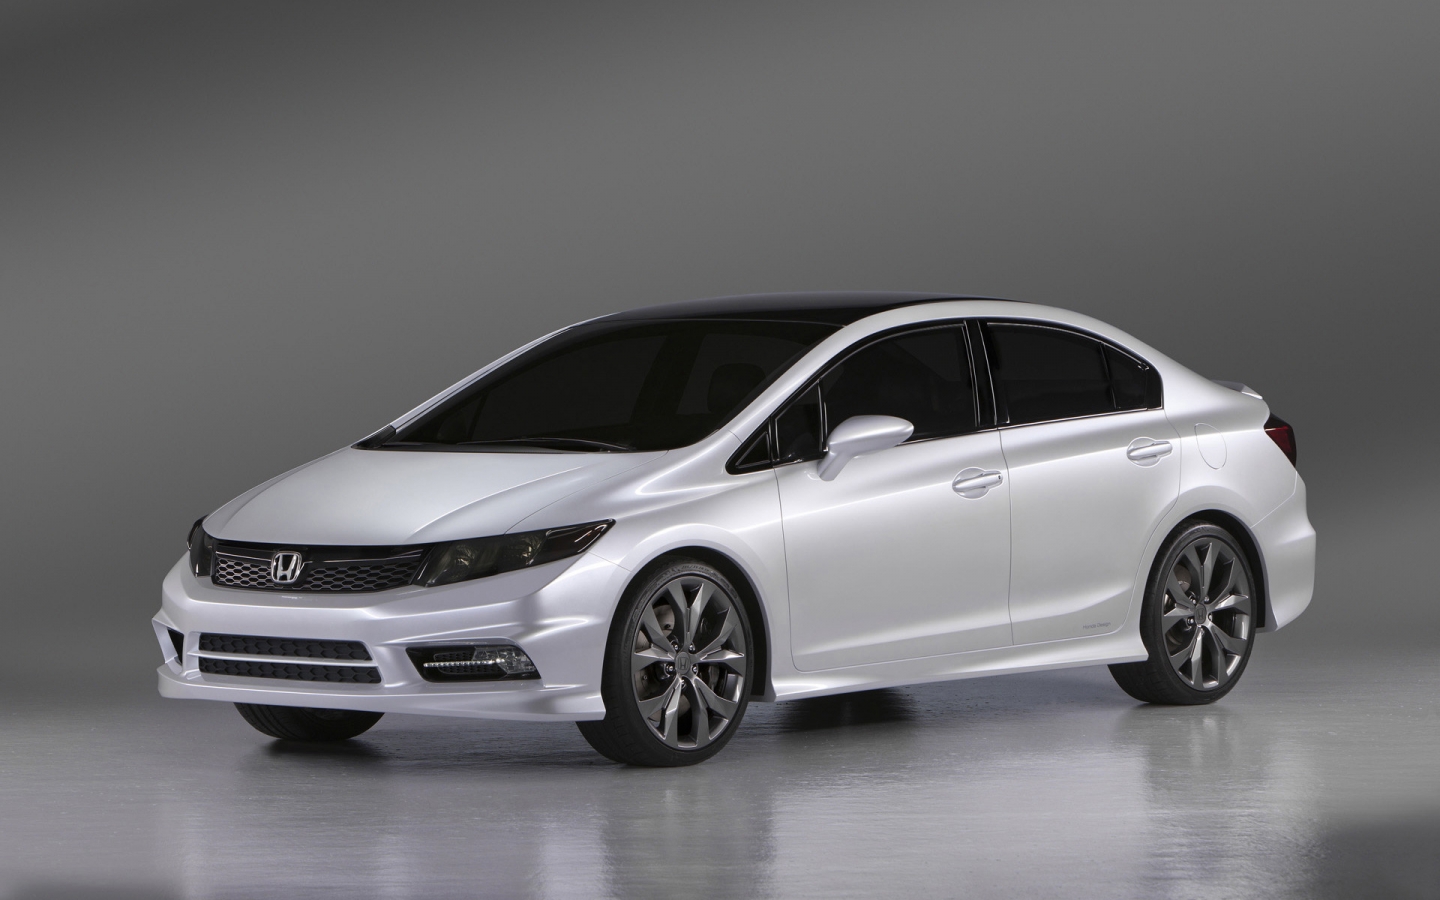 2011 Honda Civic Concept for 1440 x 900 widescreen resolution